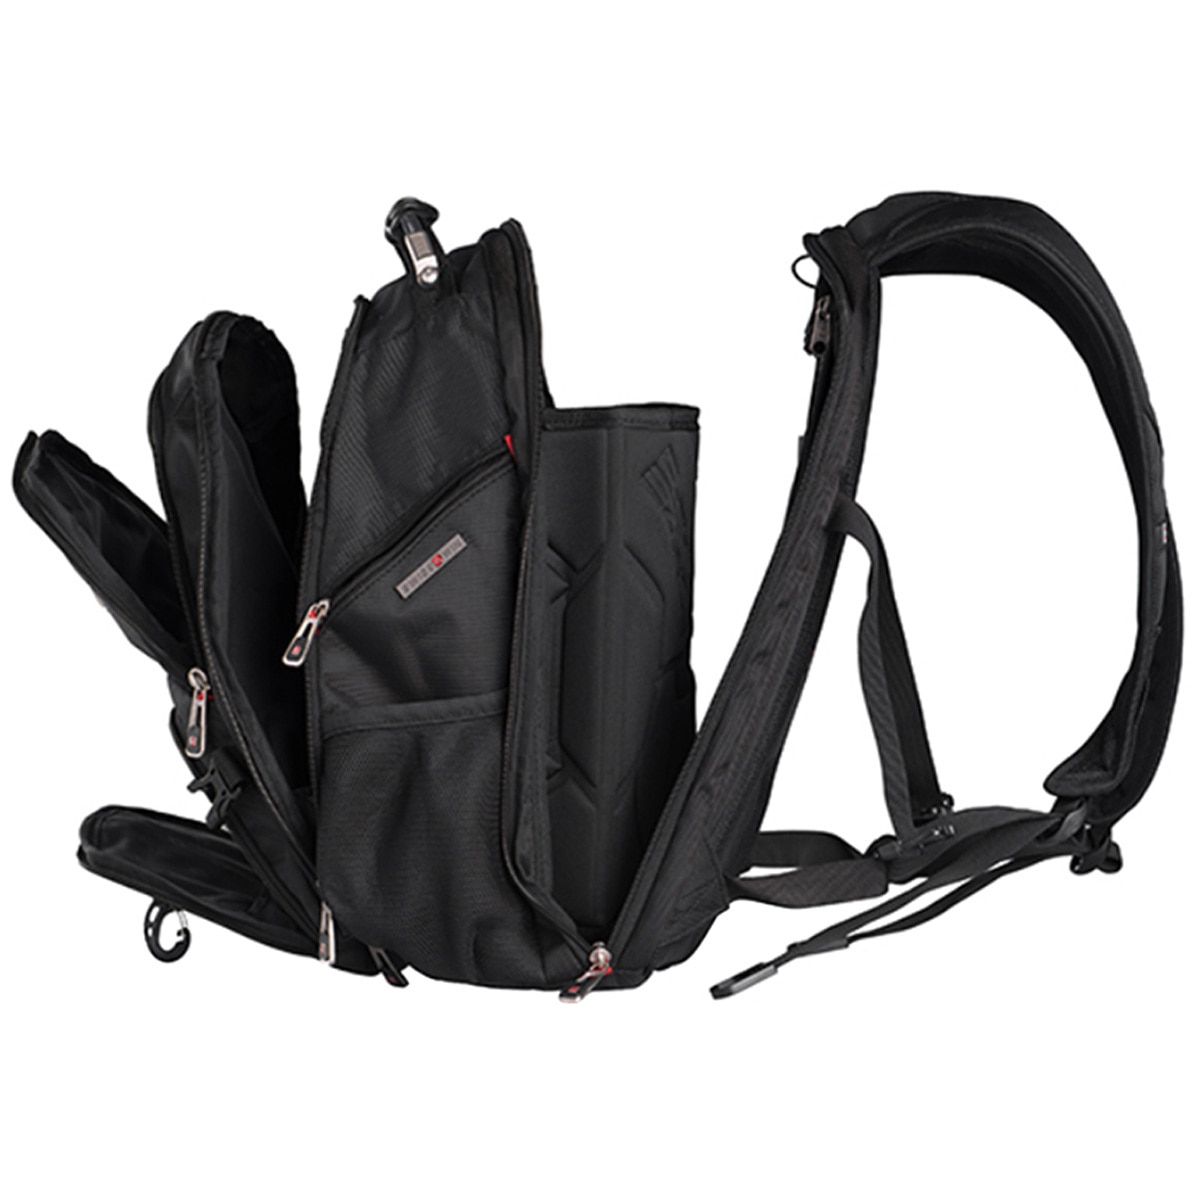 Cruiser Cushion Backpack Travel Sport Business School Riding Bag Korea Fashion 